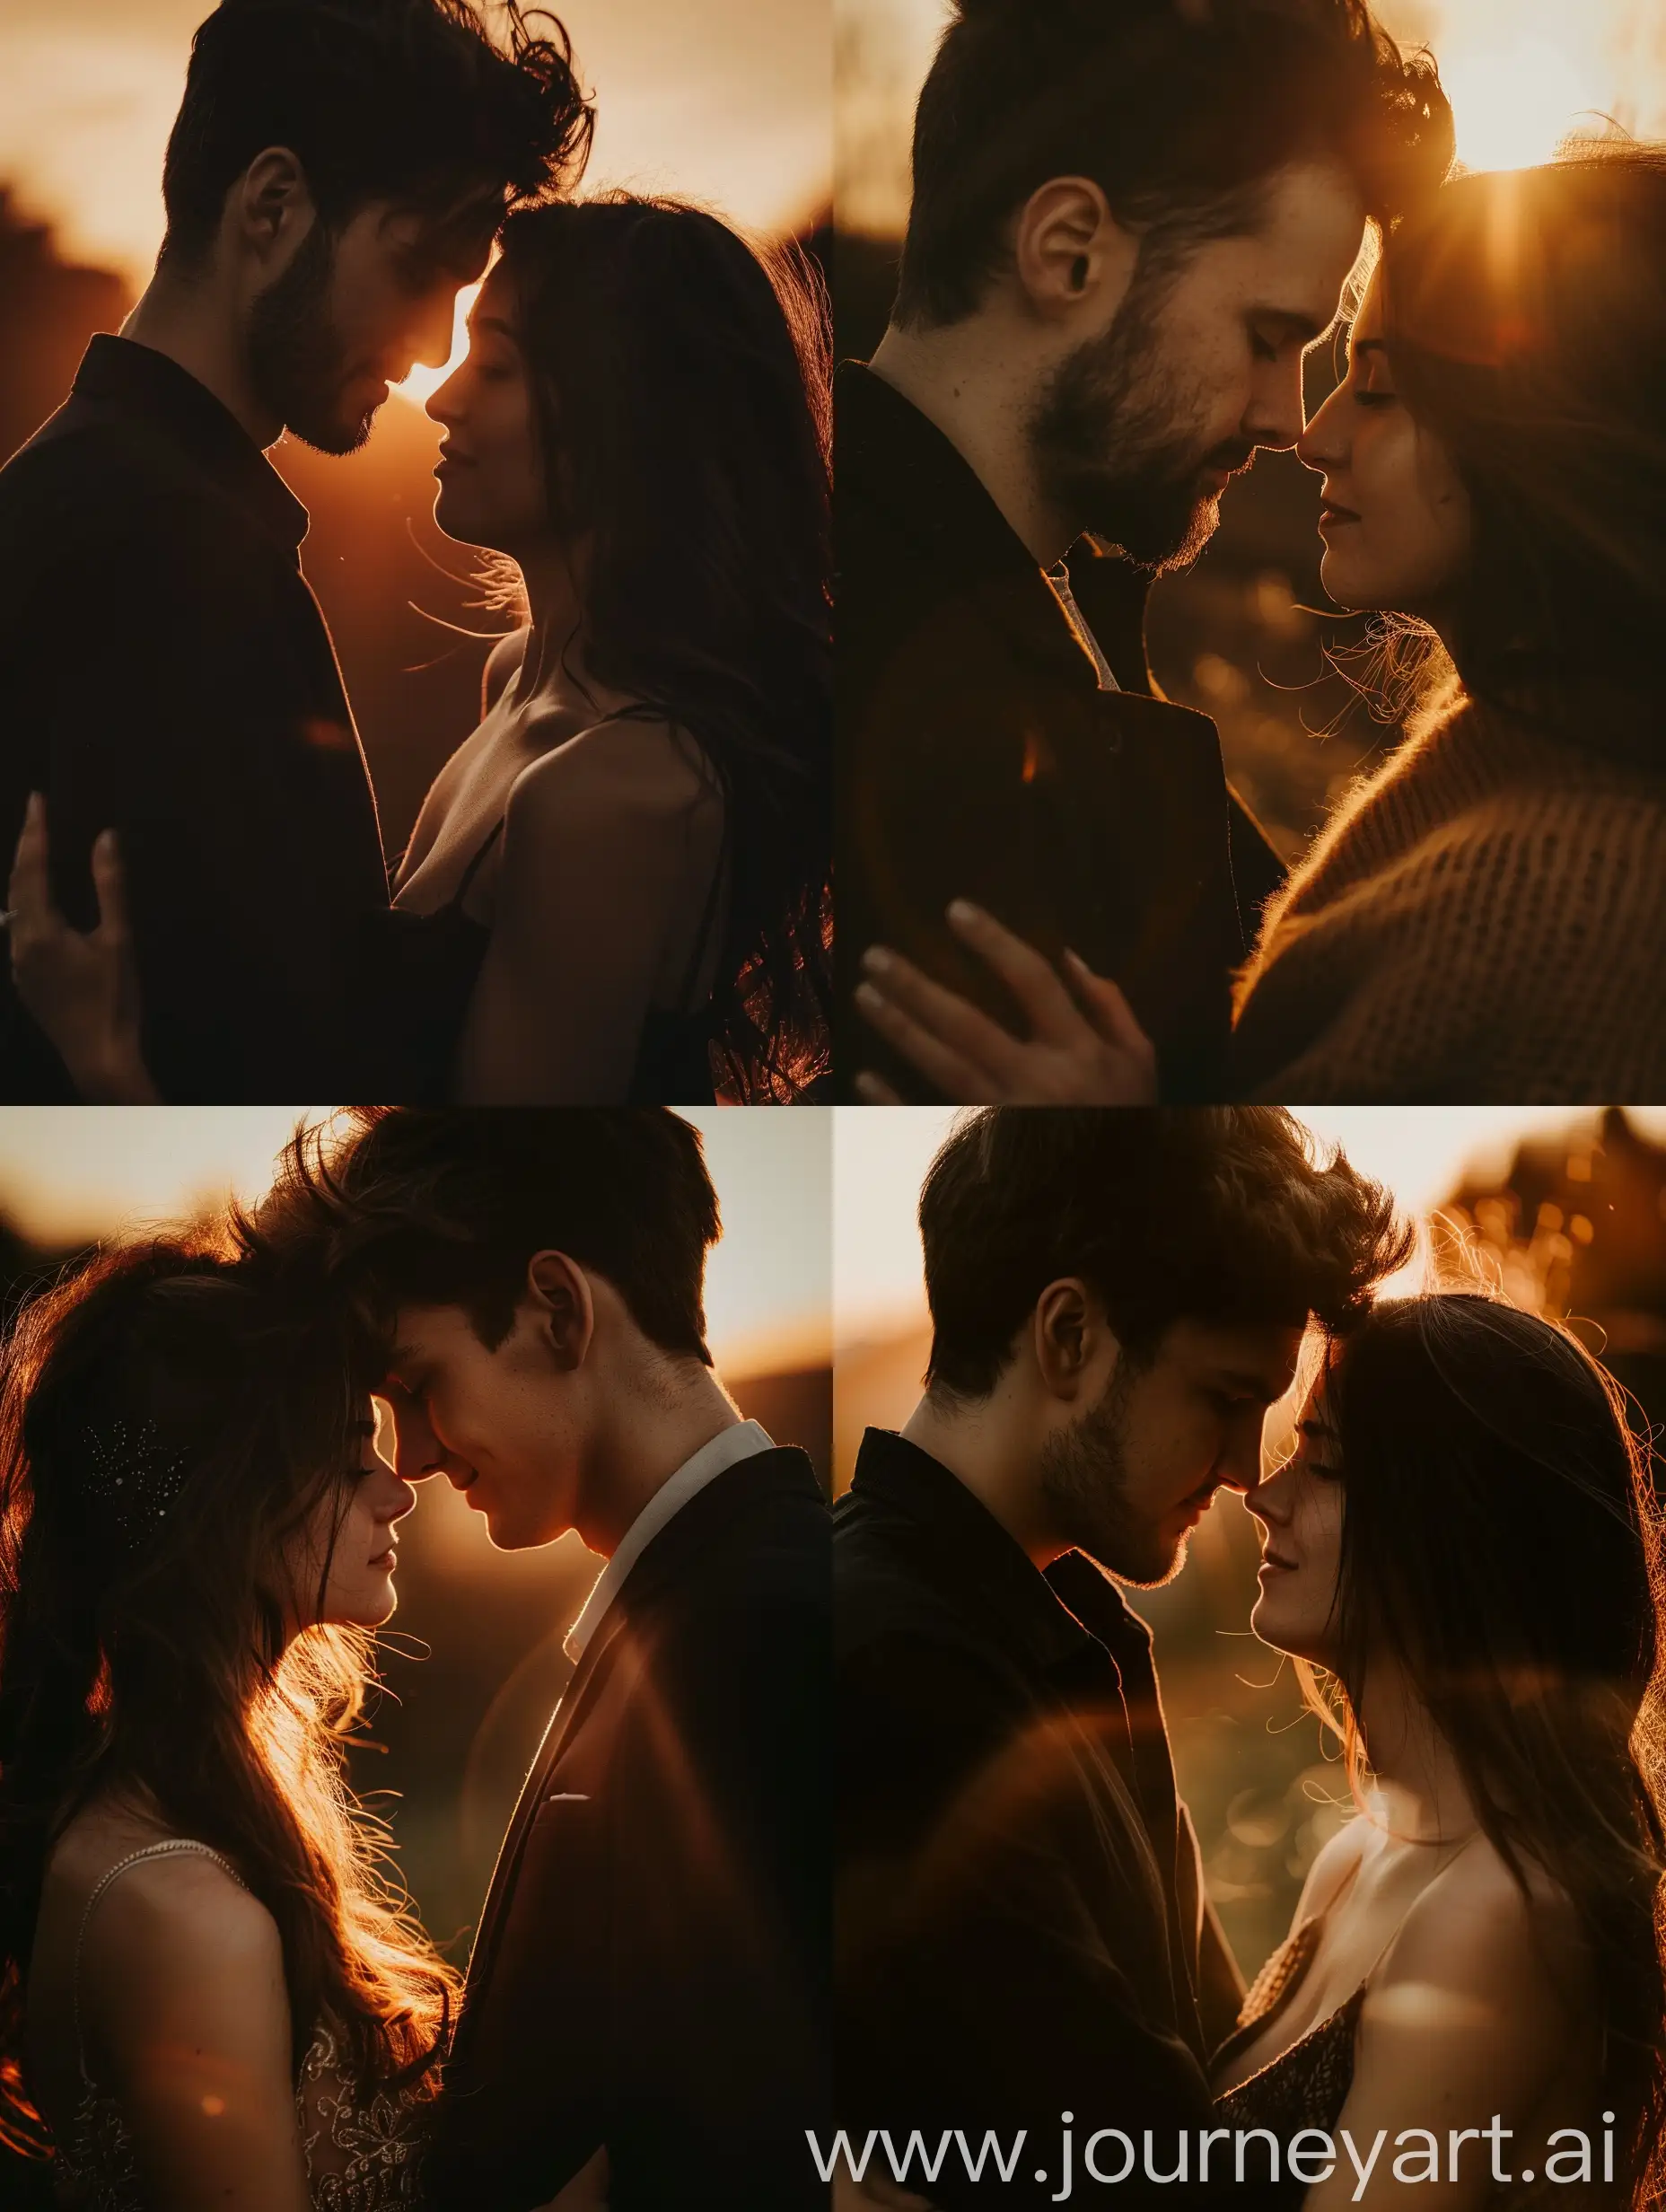 Romantic-Couple-Embracing-in-Golden-Sunset-CloseUp